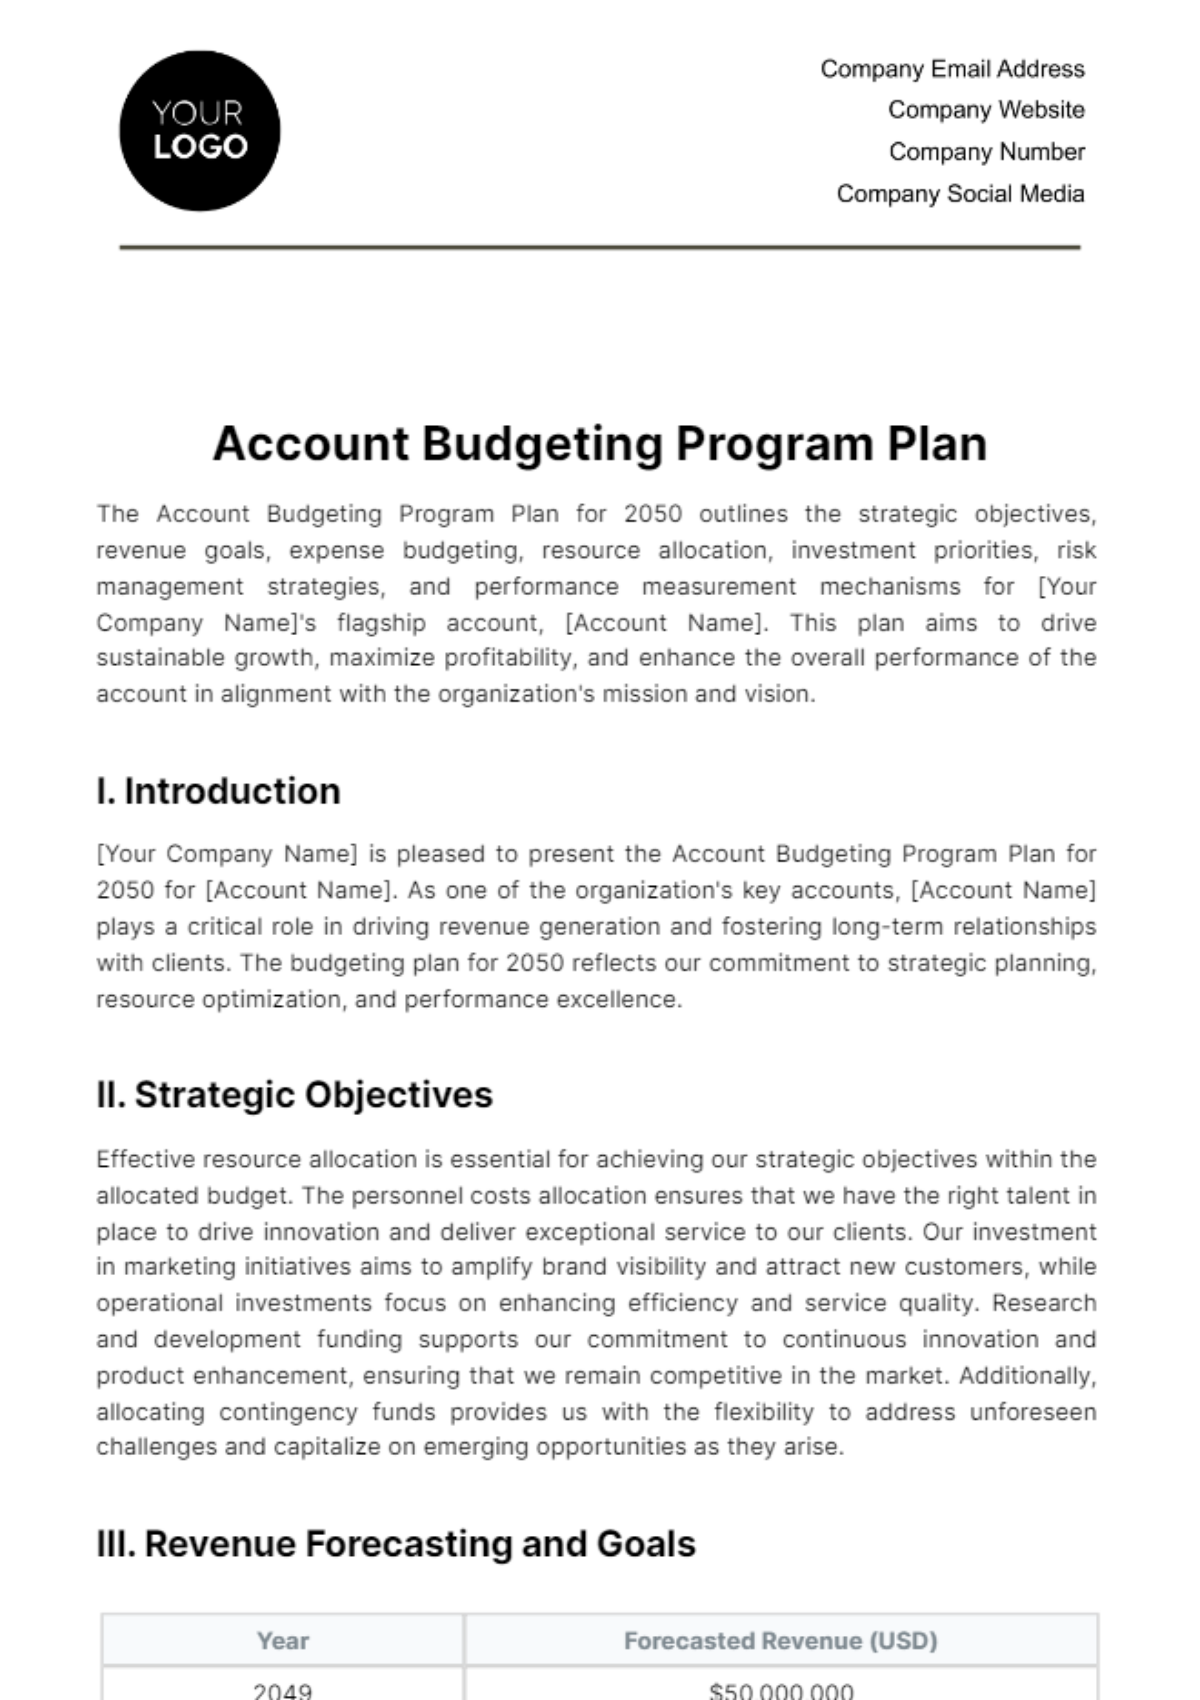 Free Account Budgeting Program Plan Template